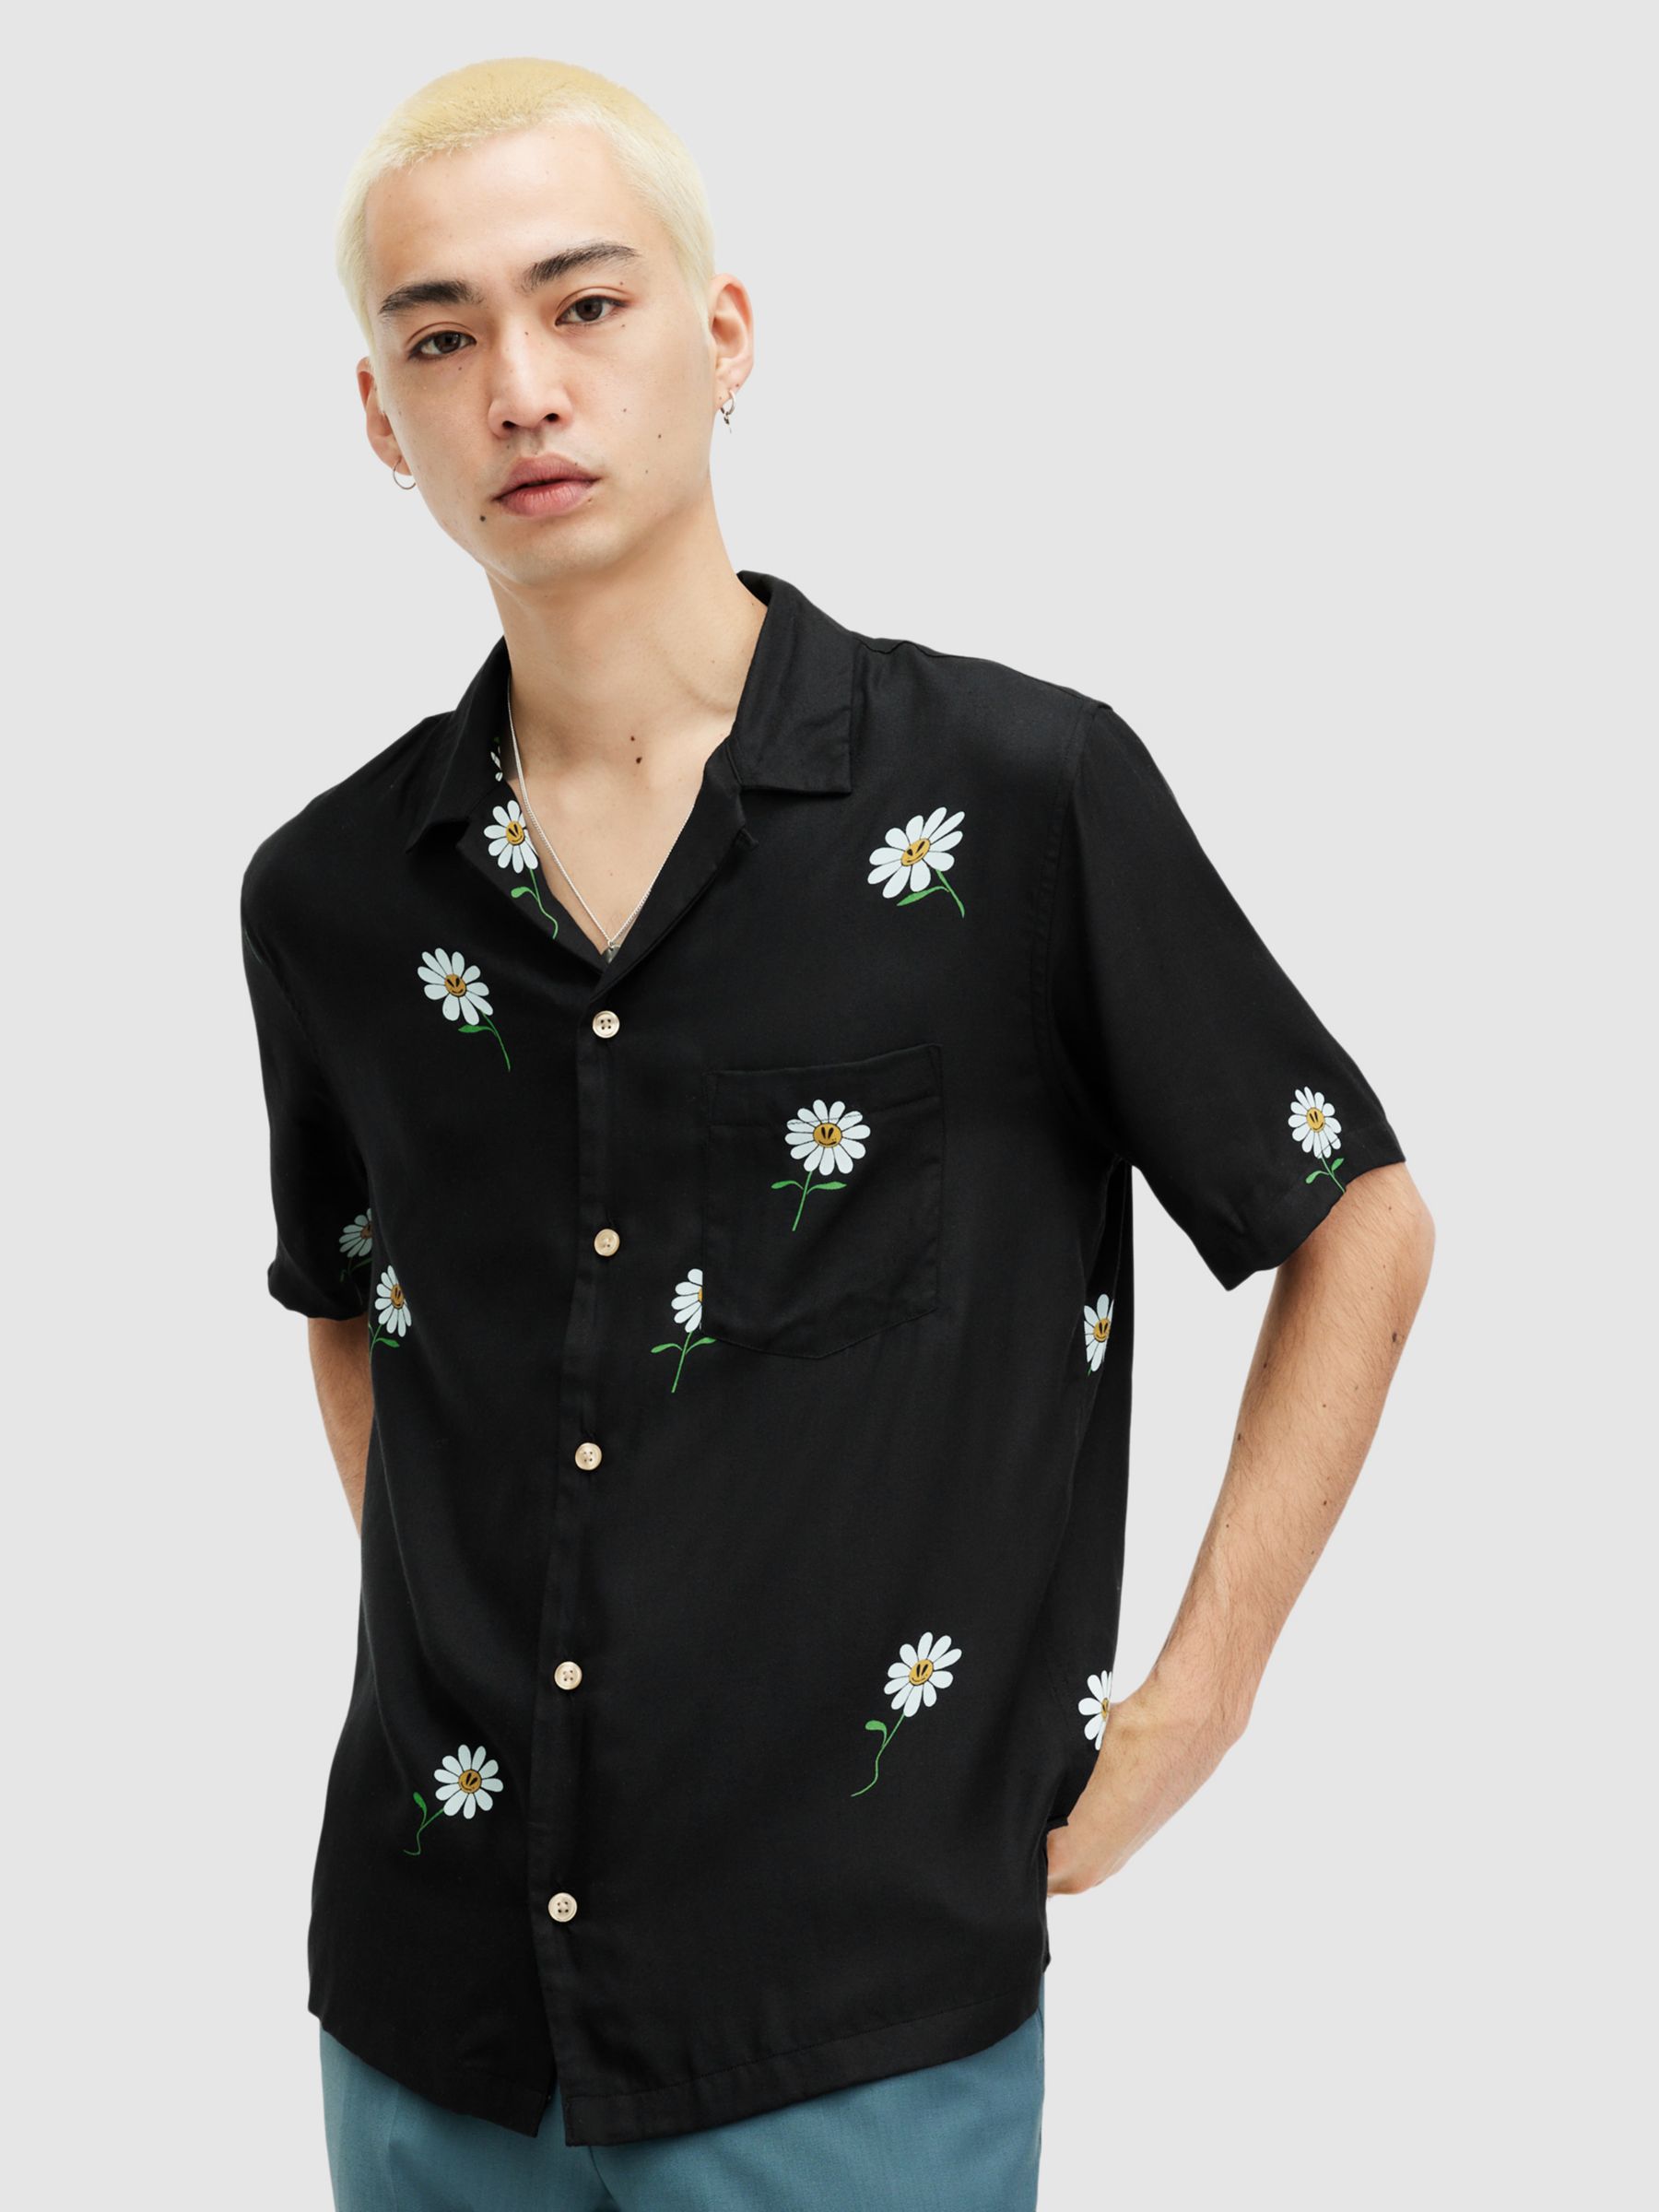 AllSaints Daisical Short Sleeve Shirt, Black/Multi, L